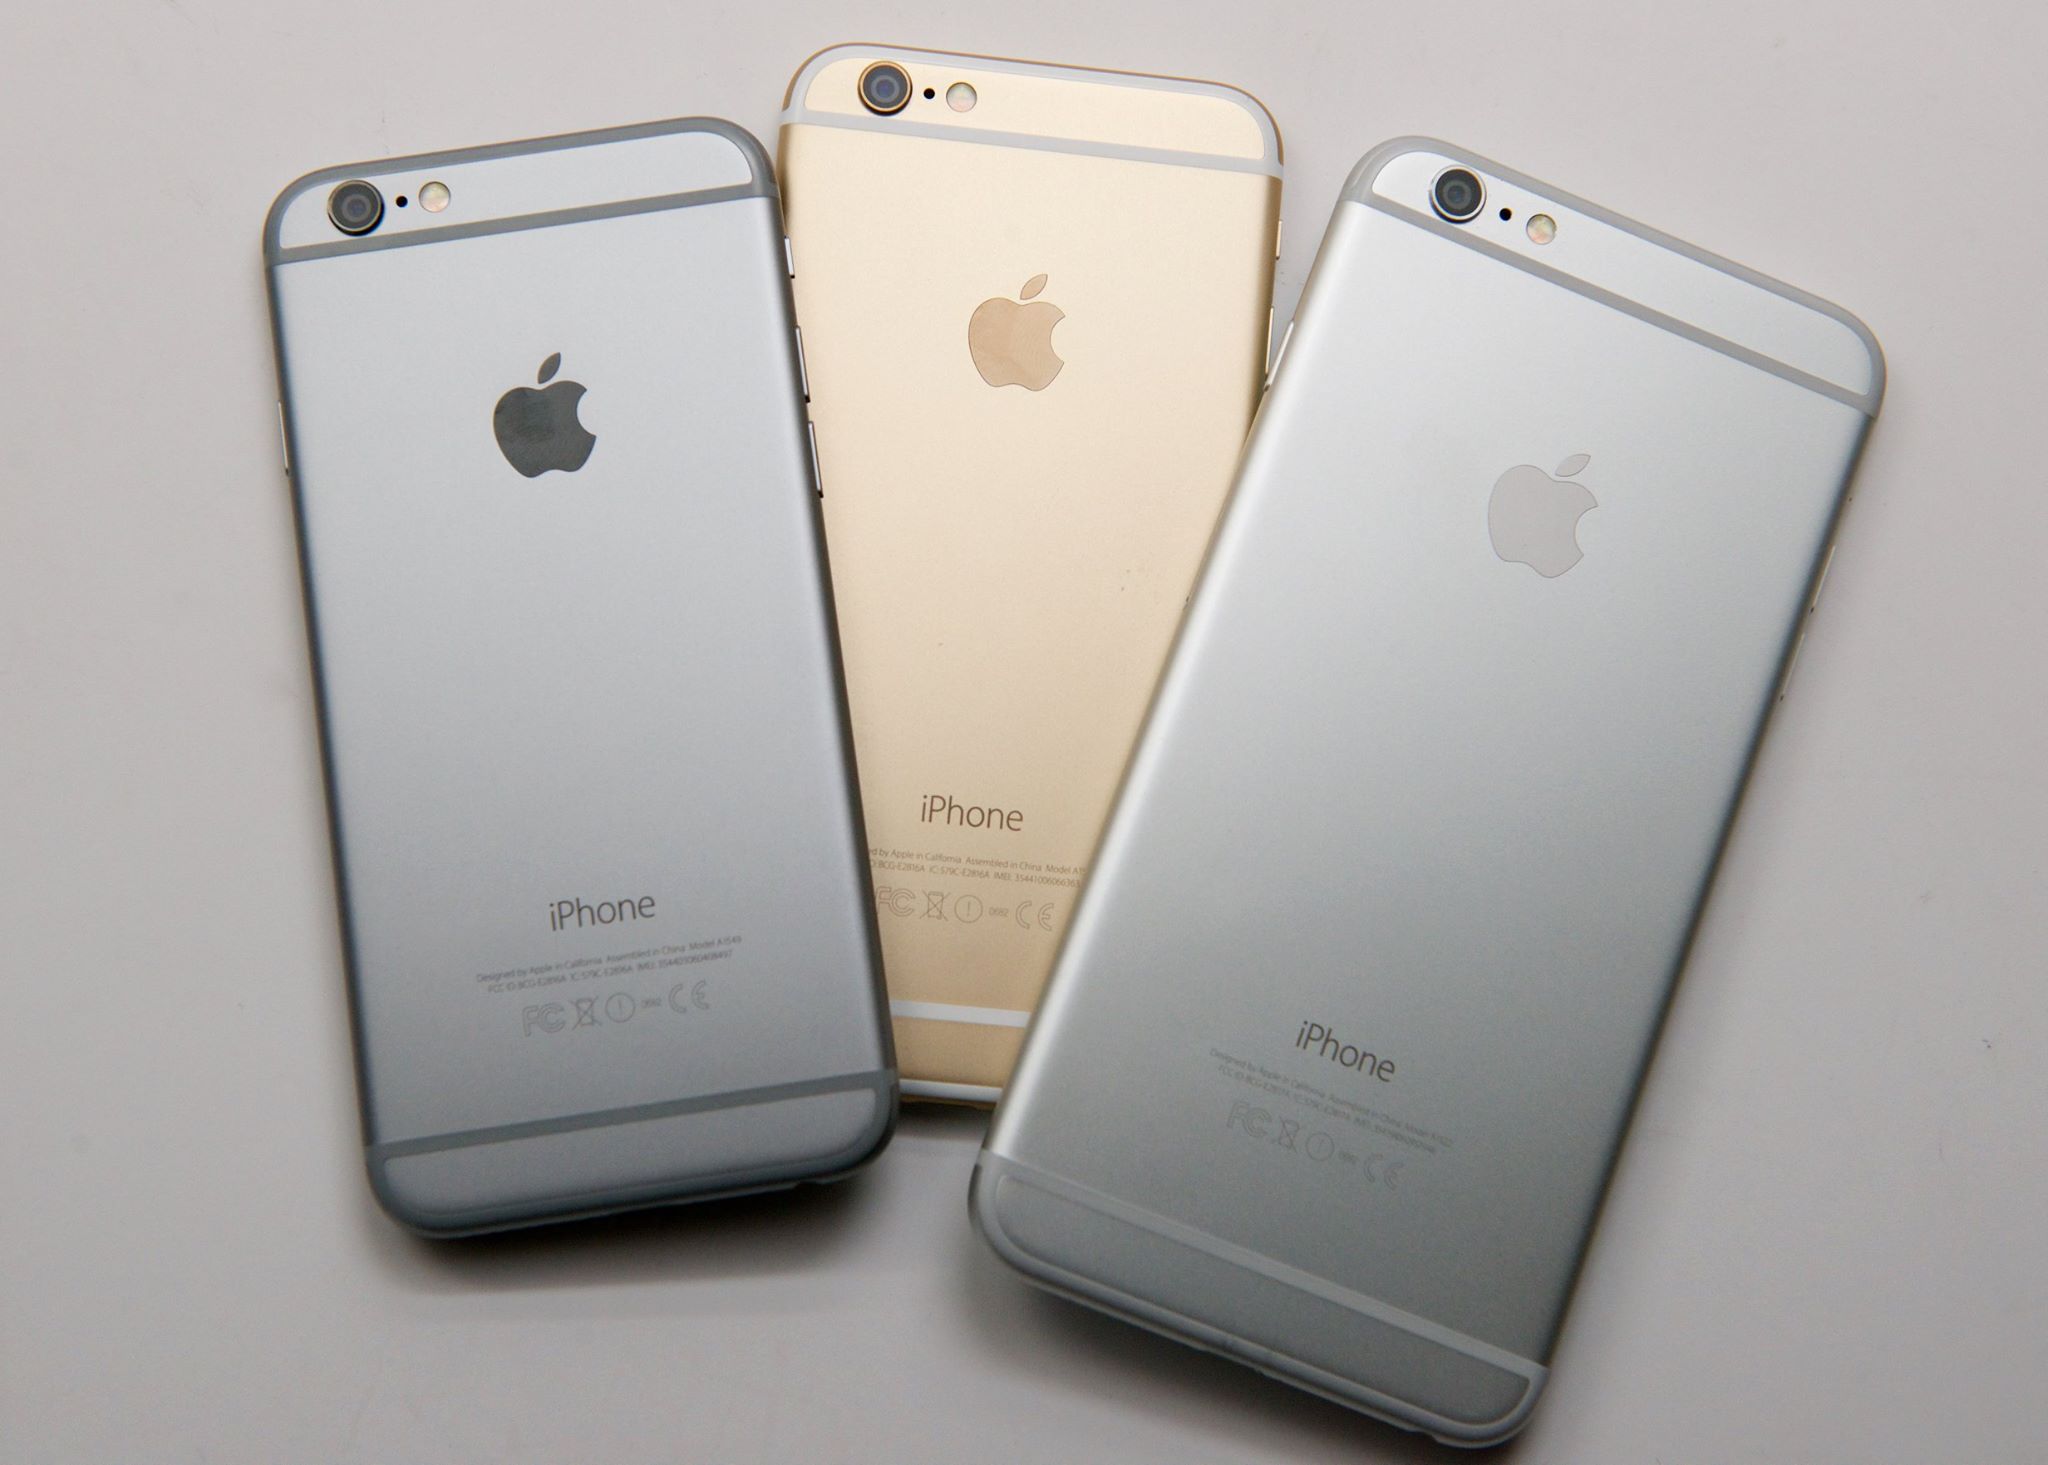 iPhone 6 Plus & iPhone 6 Deals: February 2015